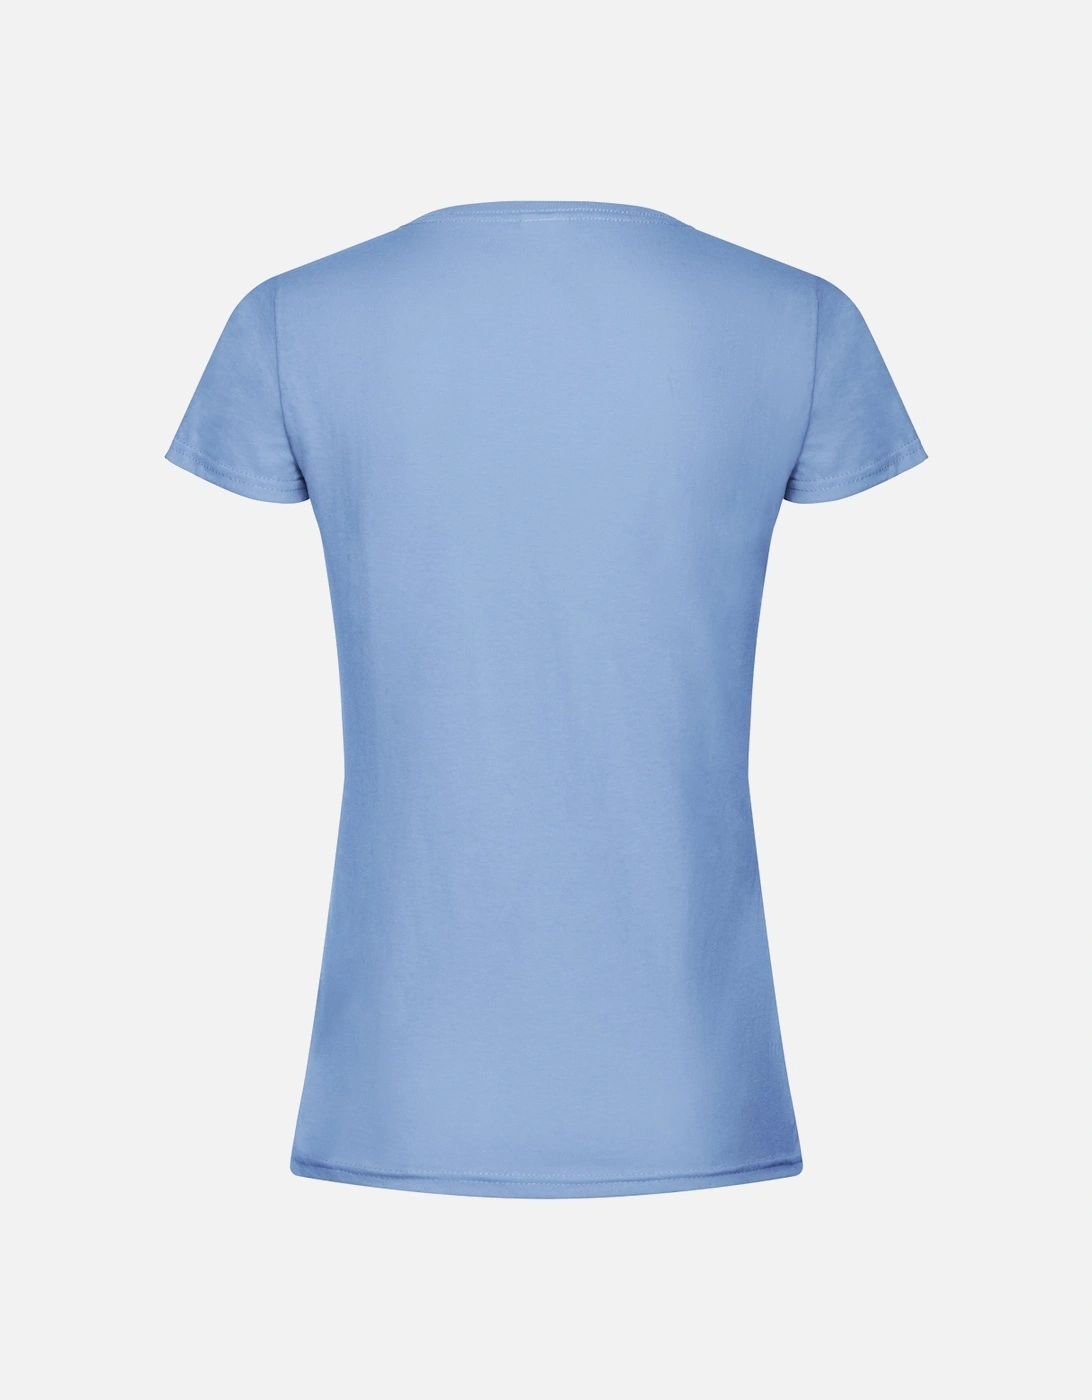 Womens/Ladies T-Shirt